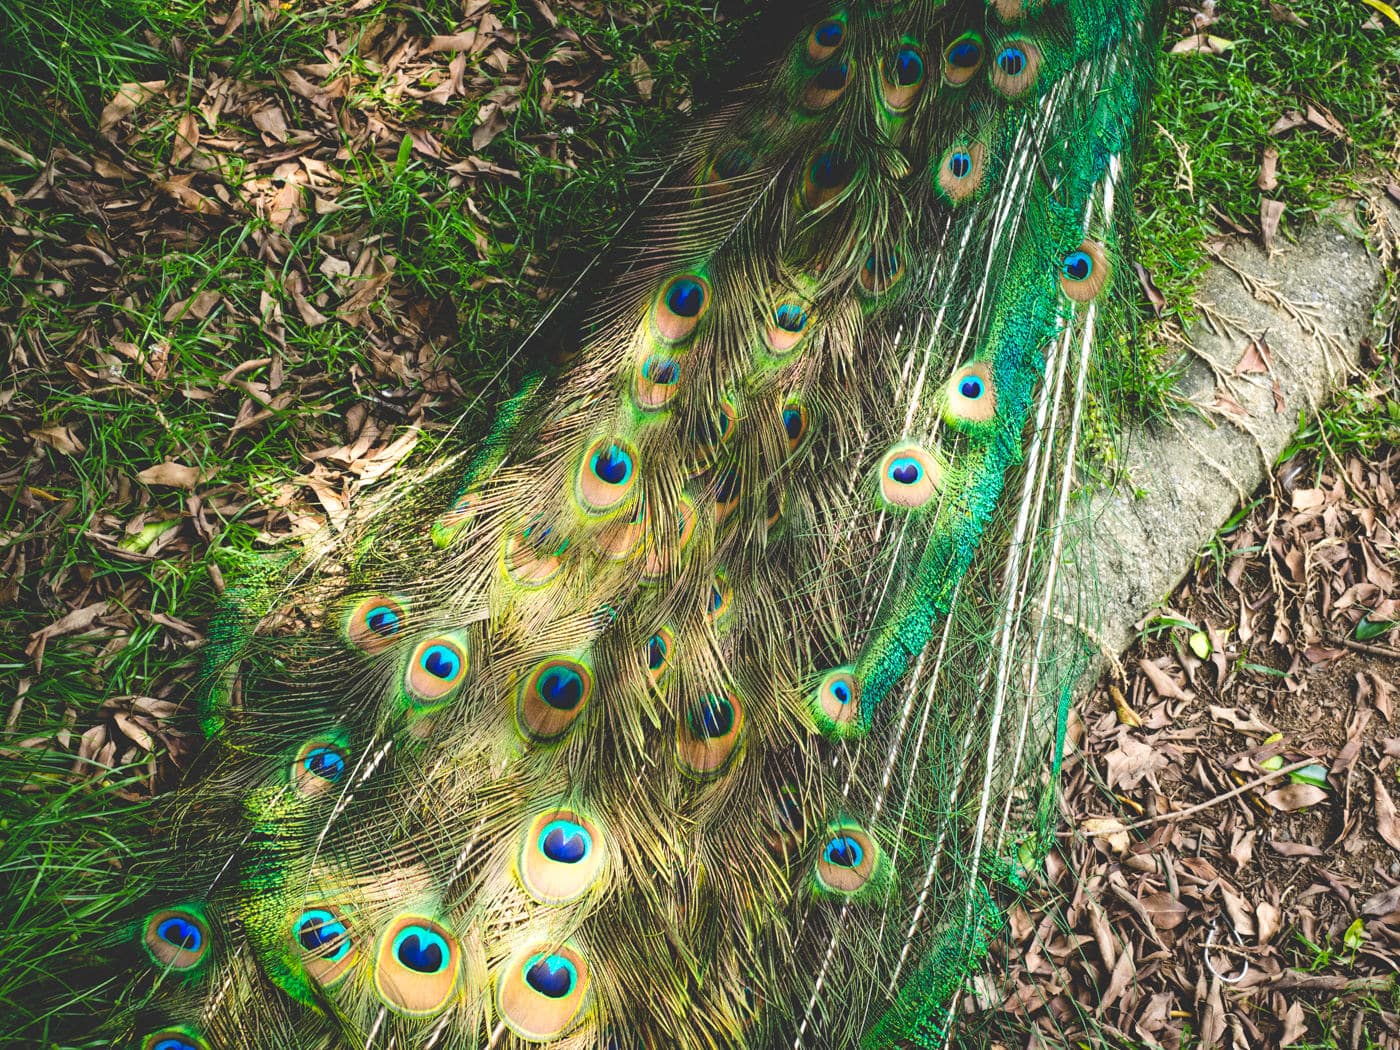 Taiwan - Peacock Garden - Eyelet feathers